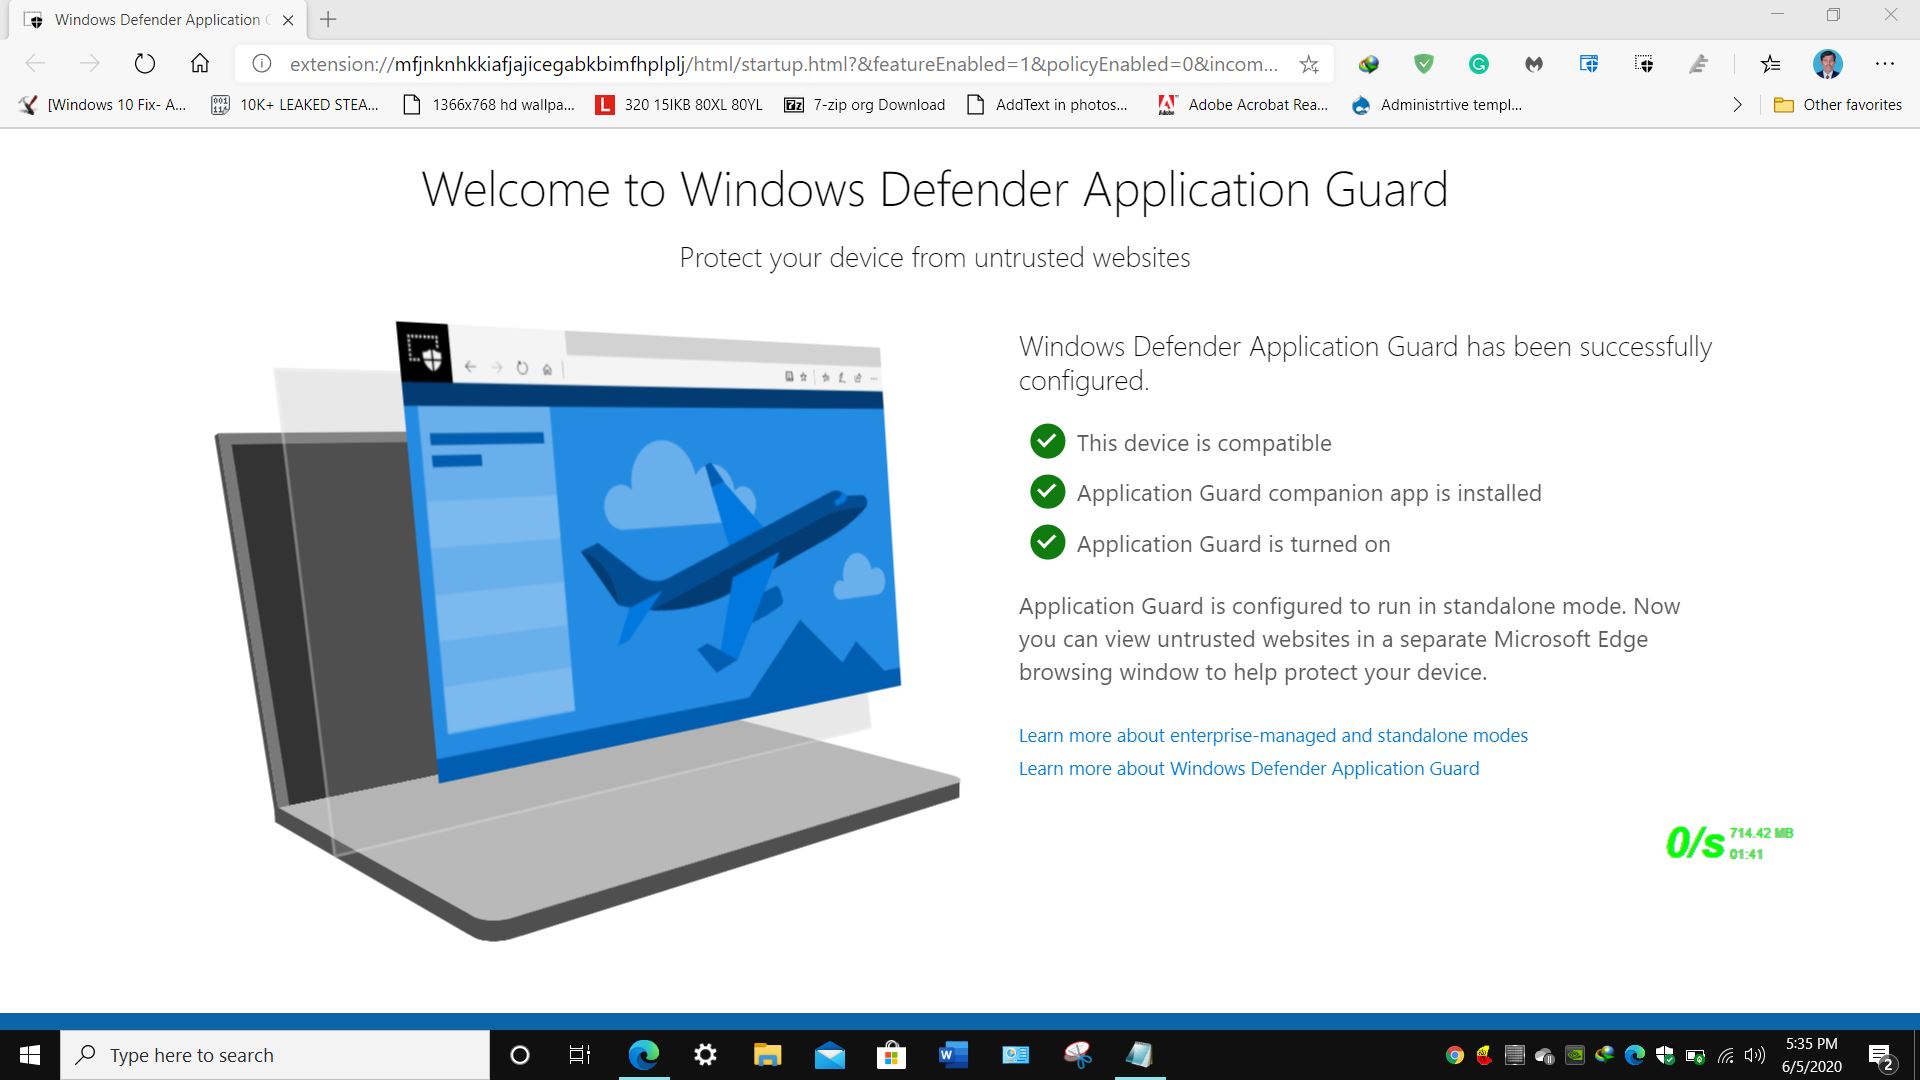 Make your Favorite Browser to more secure by enabling windowsb defender application guard... b4d0500a-db5c-4473-8f1d-9d8d38daae67?upload=true.jpg